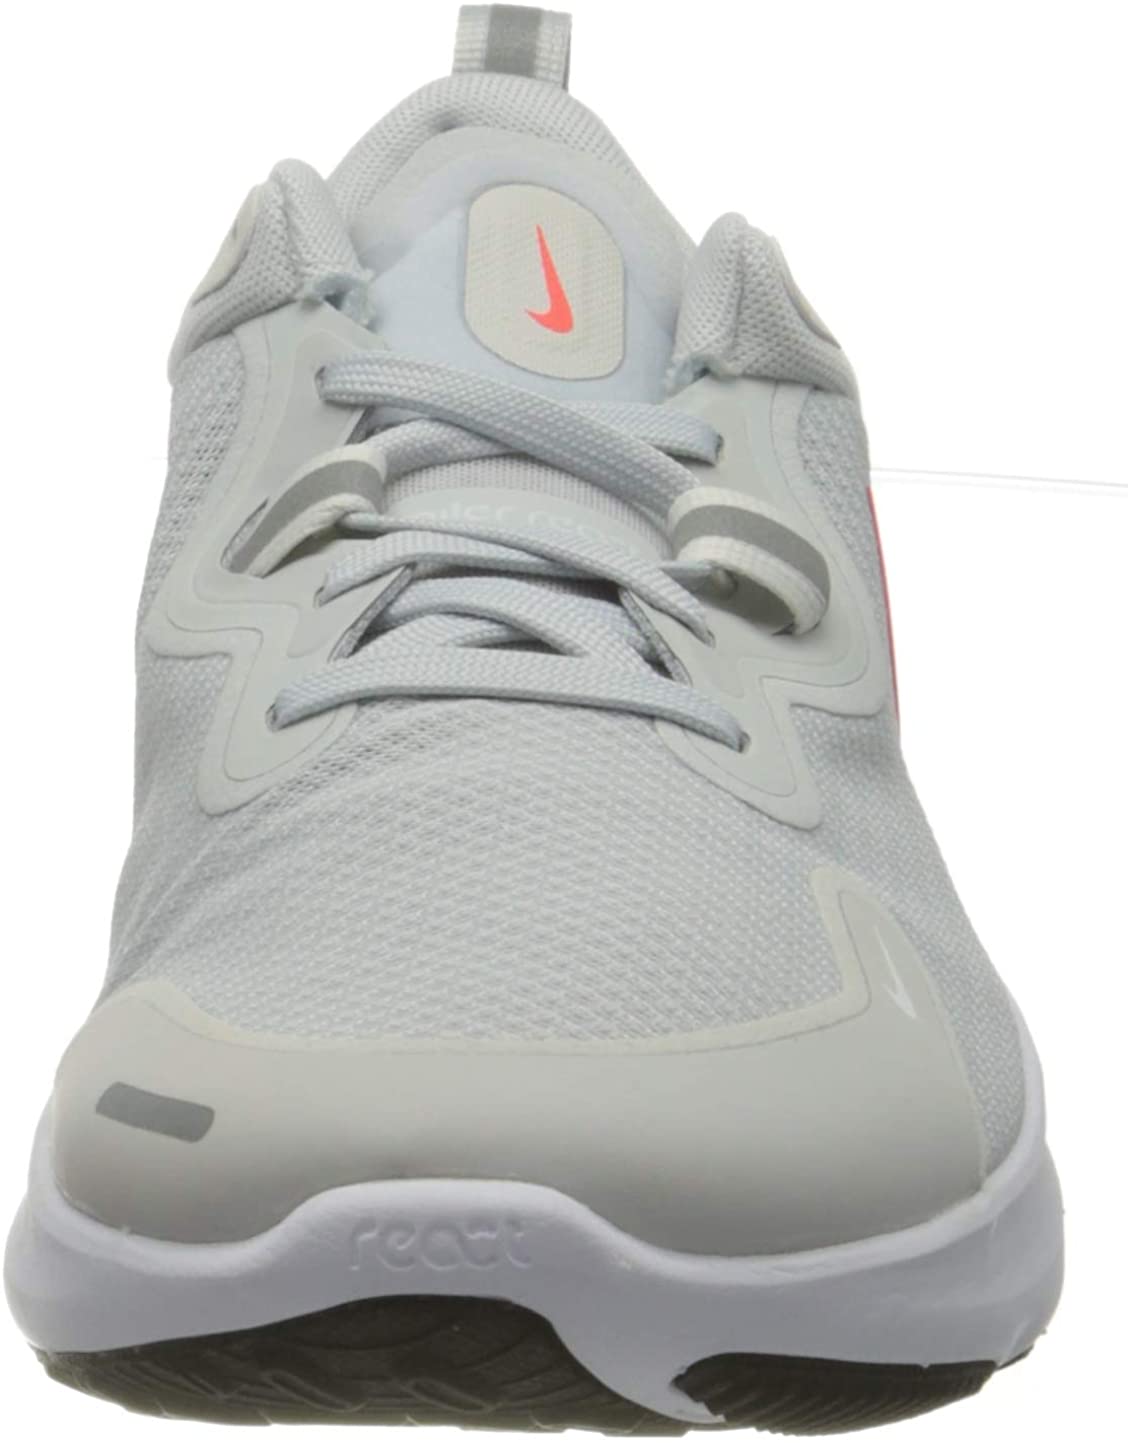 Nike Men's React Miler Running Shoe, Platinum/Crimson/Blue, 12 D(M) US - image 2 of 7